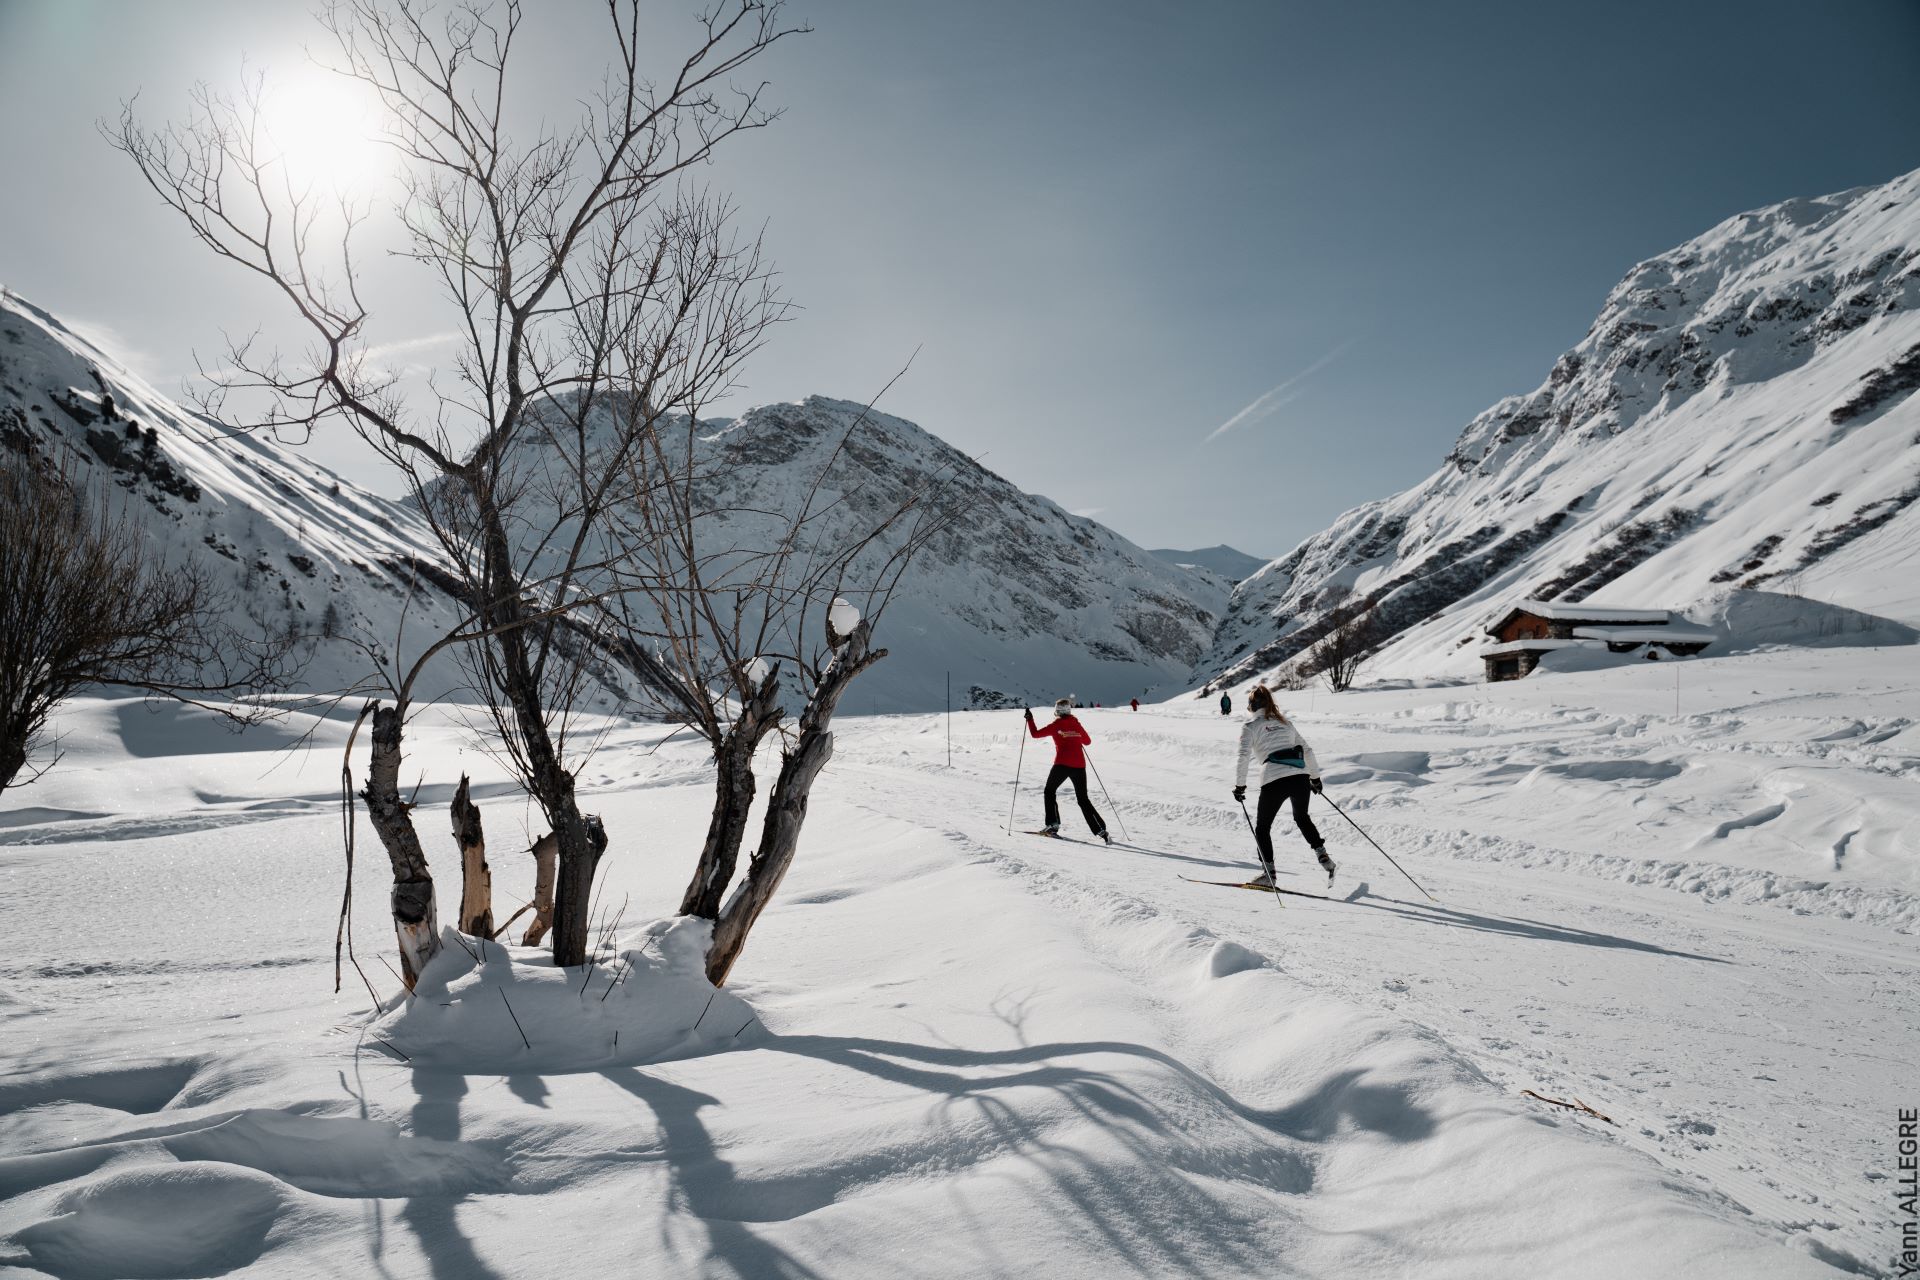 valdisere-ski-de-fond-station-ski-montagne-alpes-oxygene-ski-collection 